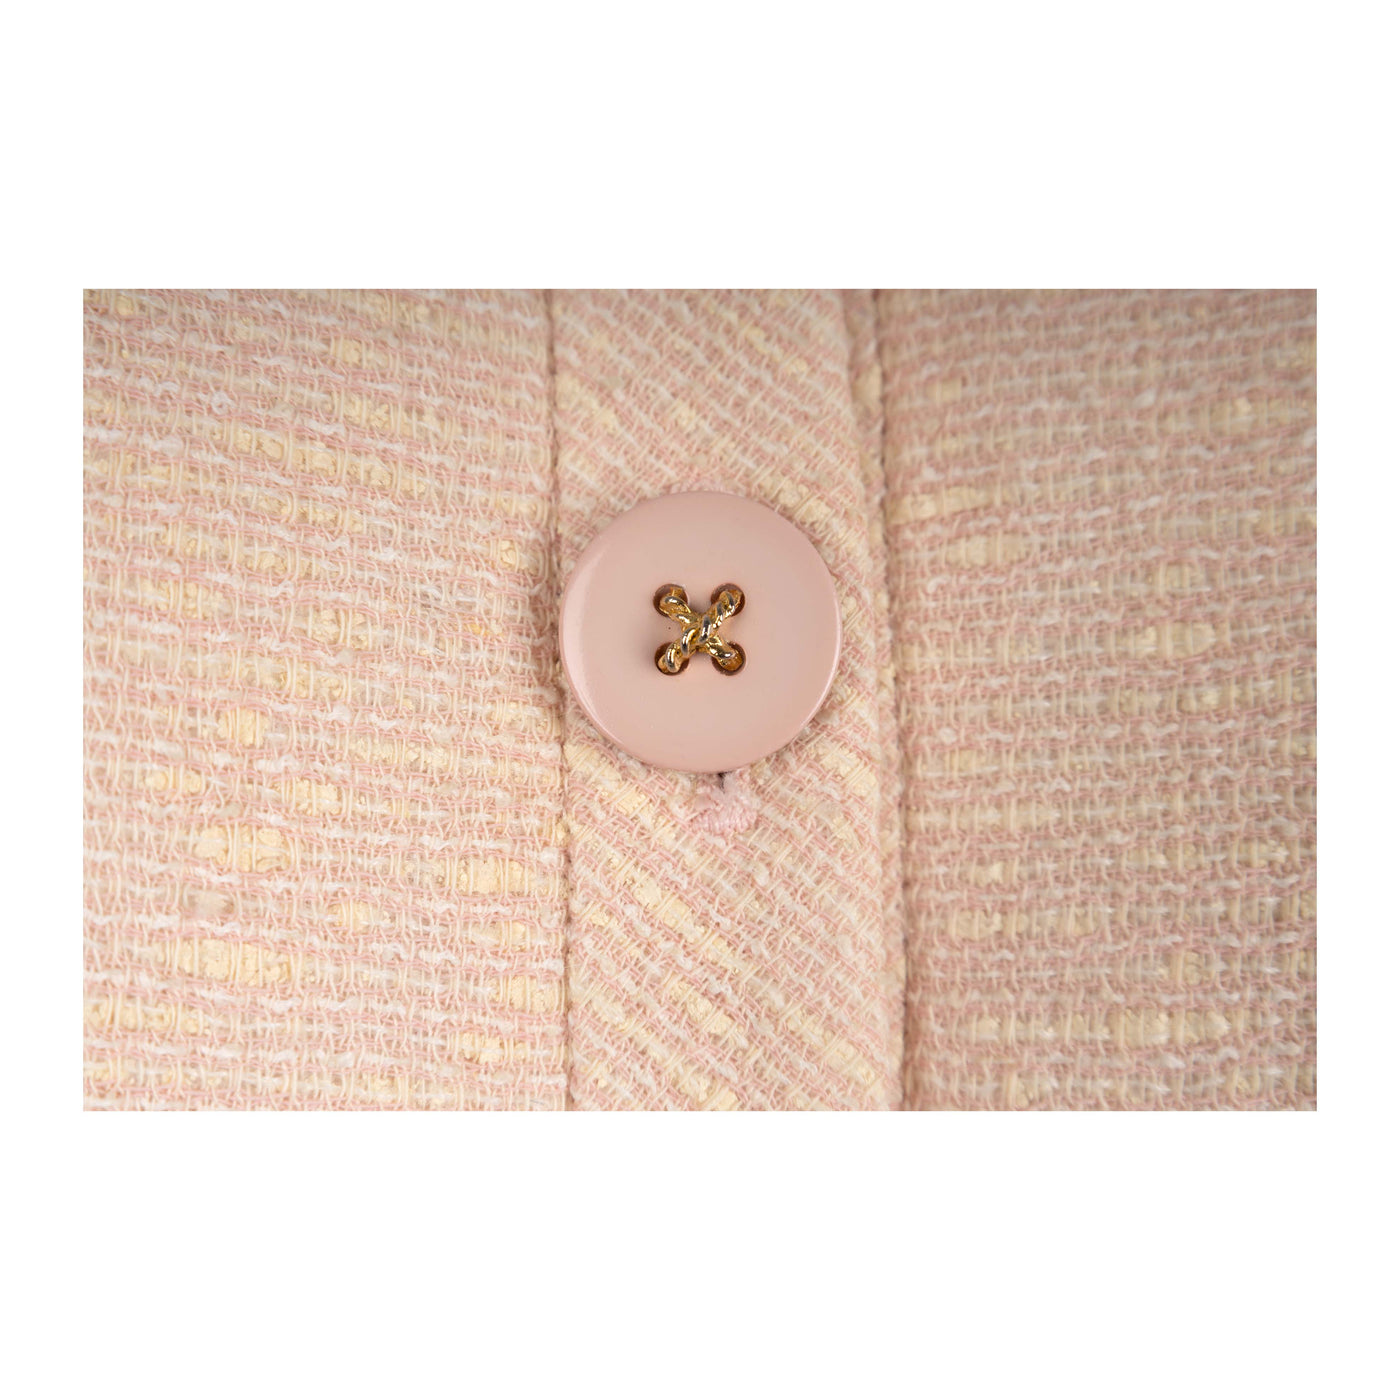 Secondhand Valentino Pale Pink Wool Jacket